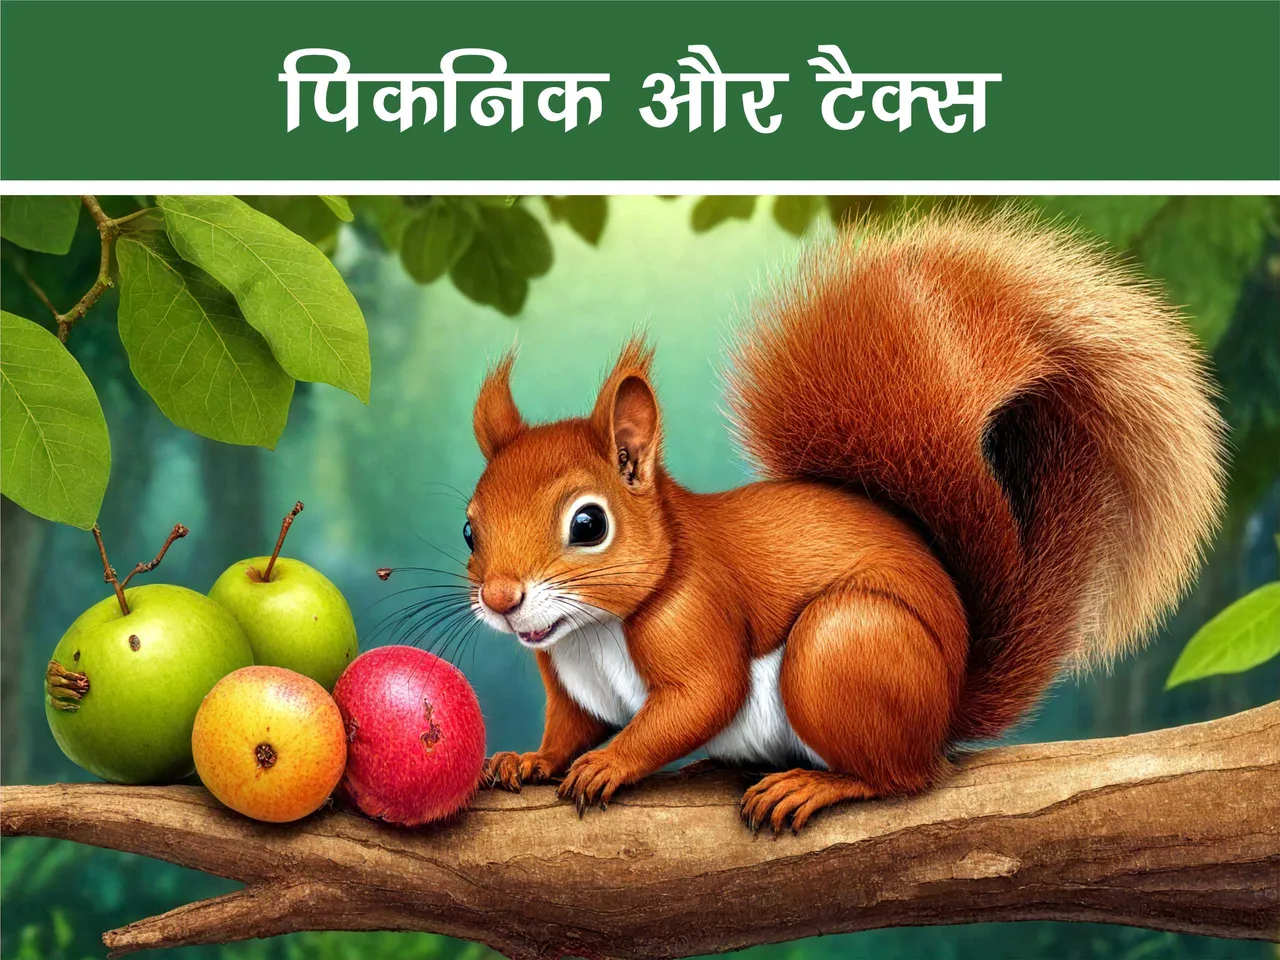 cartoon image of a squirrel in jungle